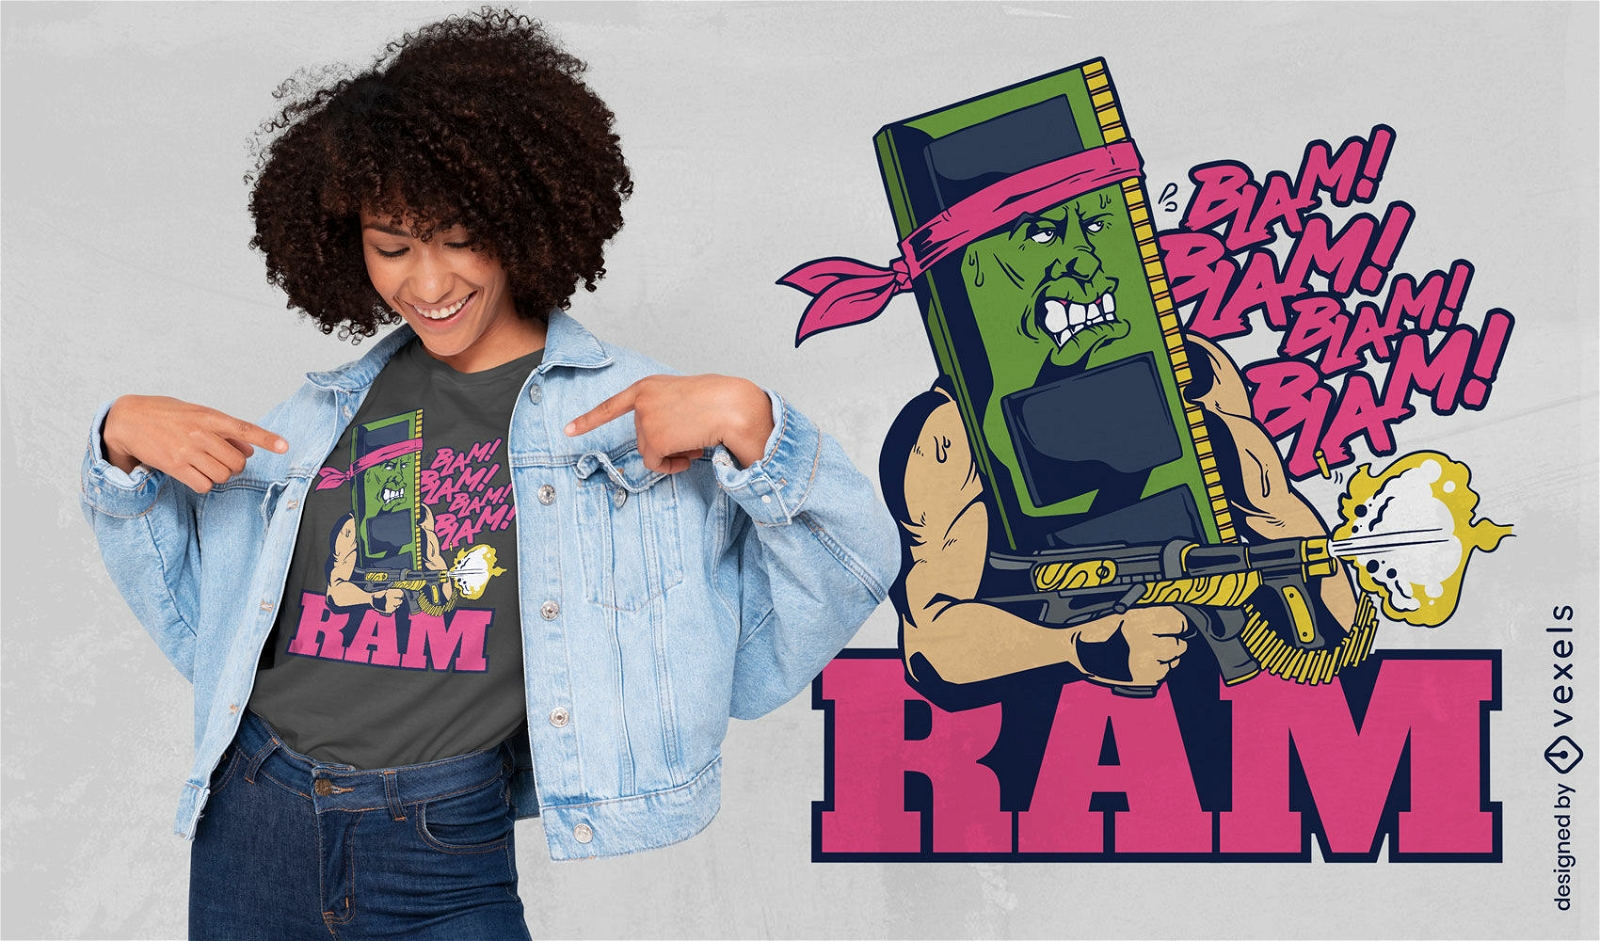 Ram memory action movie parody t-shirt design